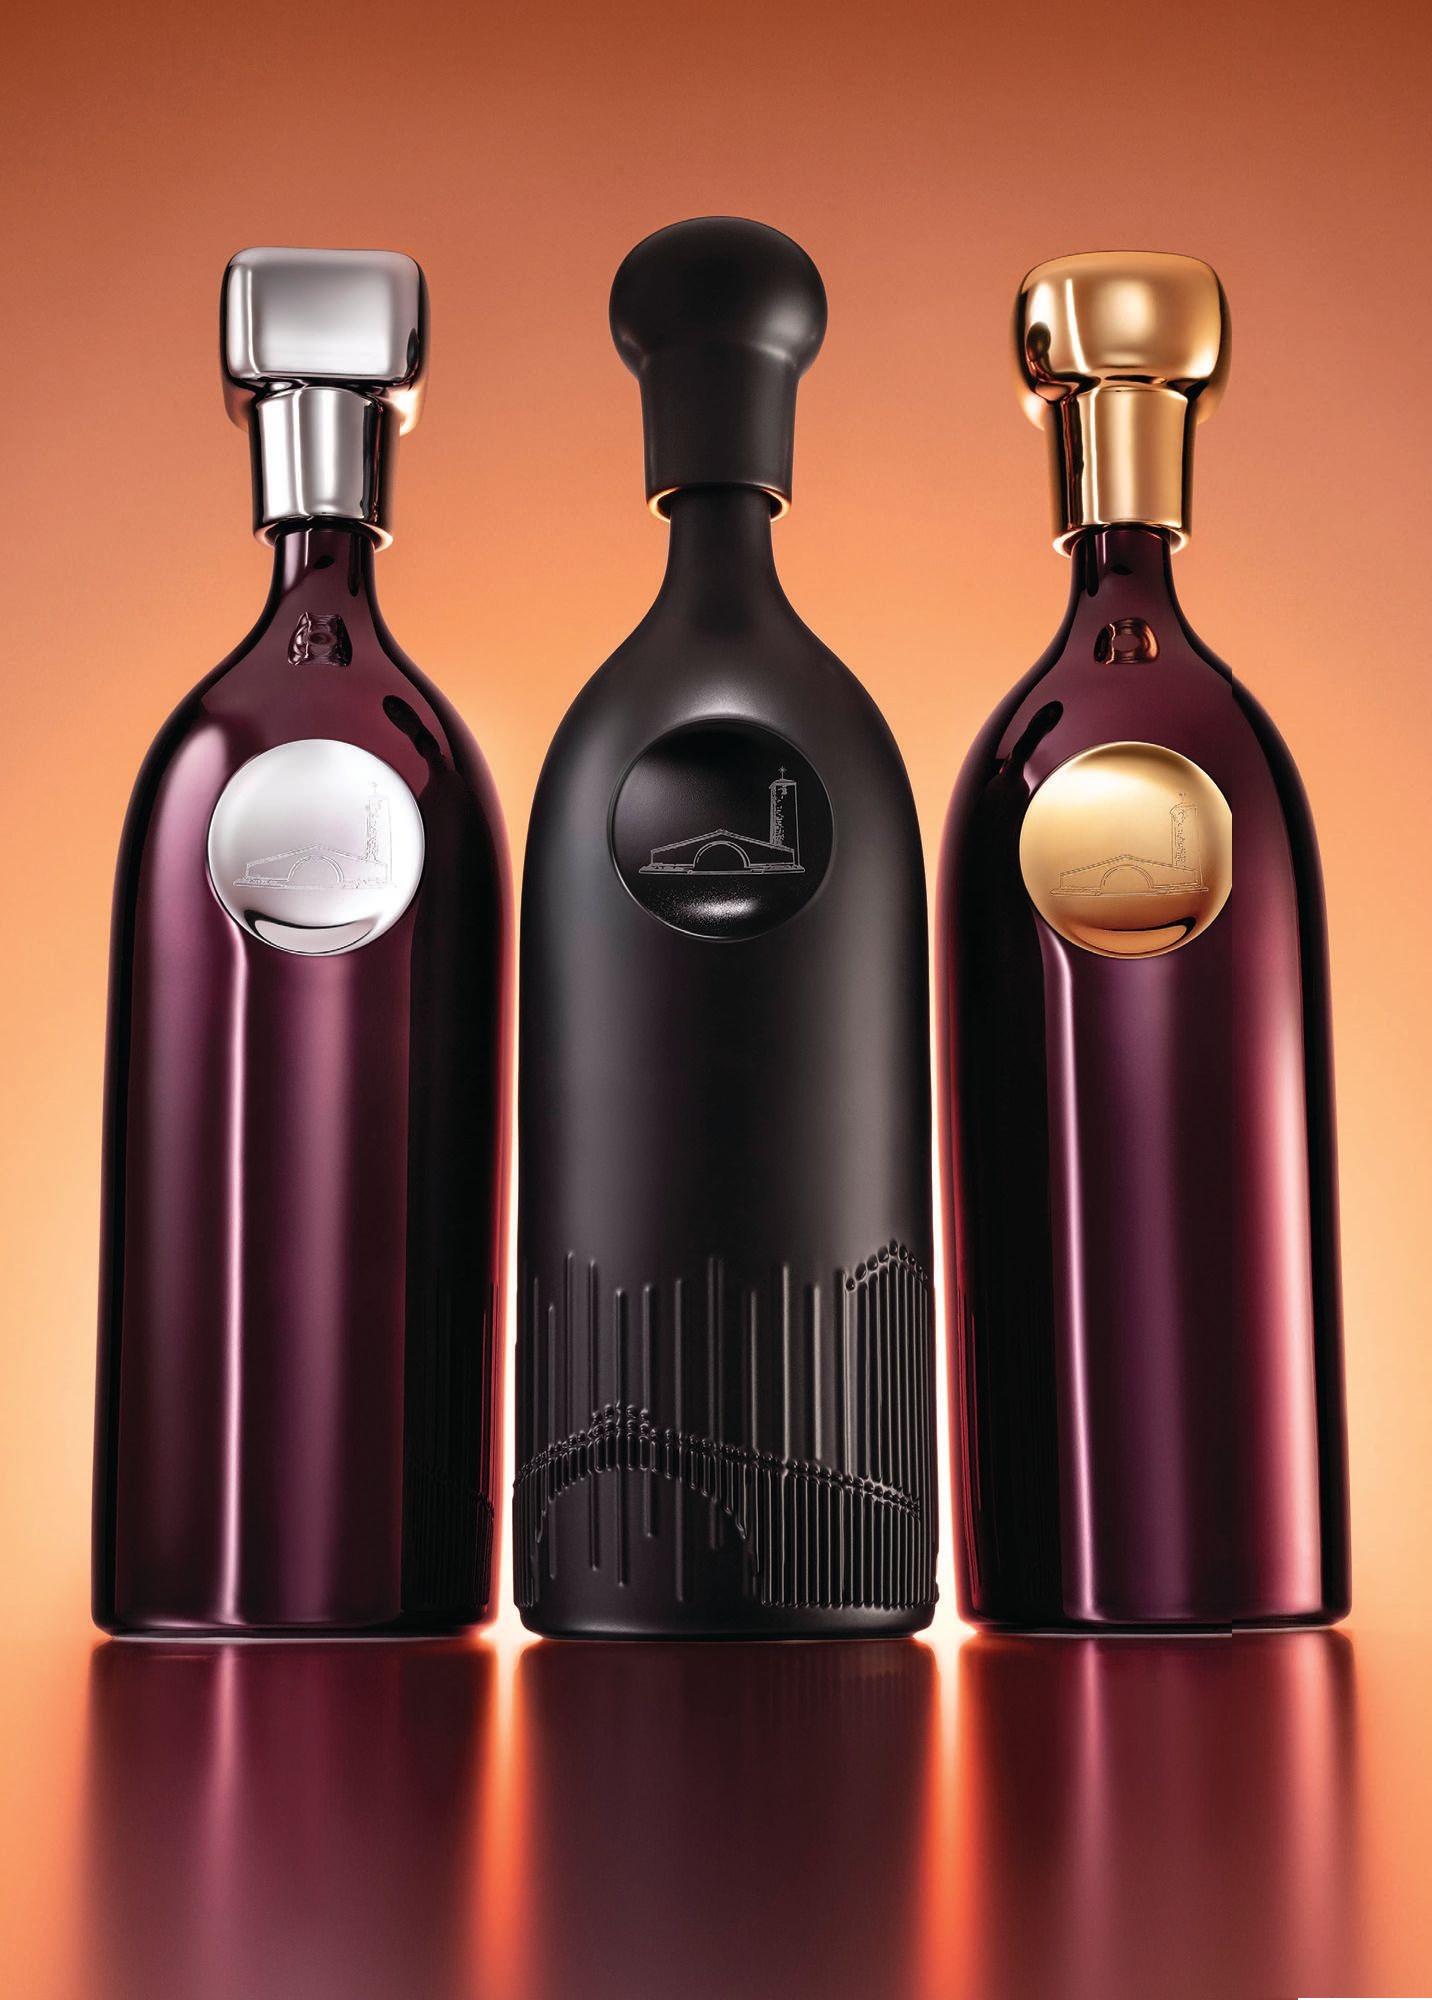 A trio of the newly designed bottles by Bernardaud PHOTO BY TIM HOGAN